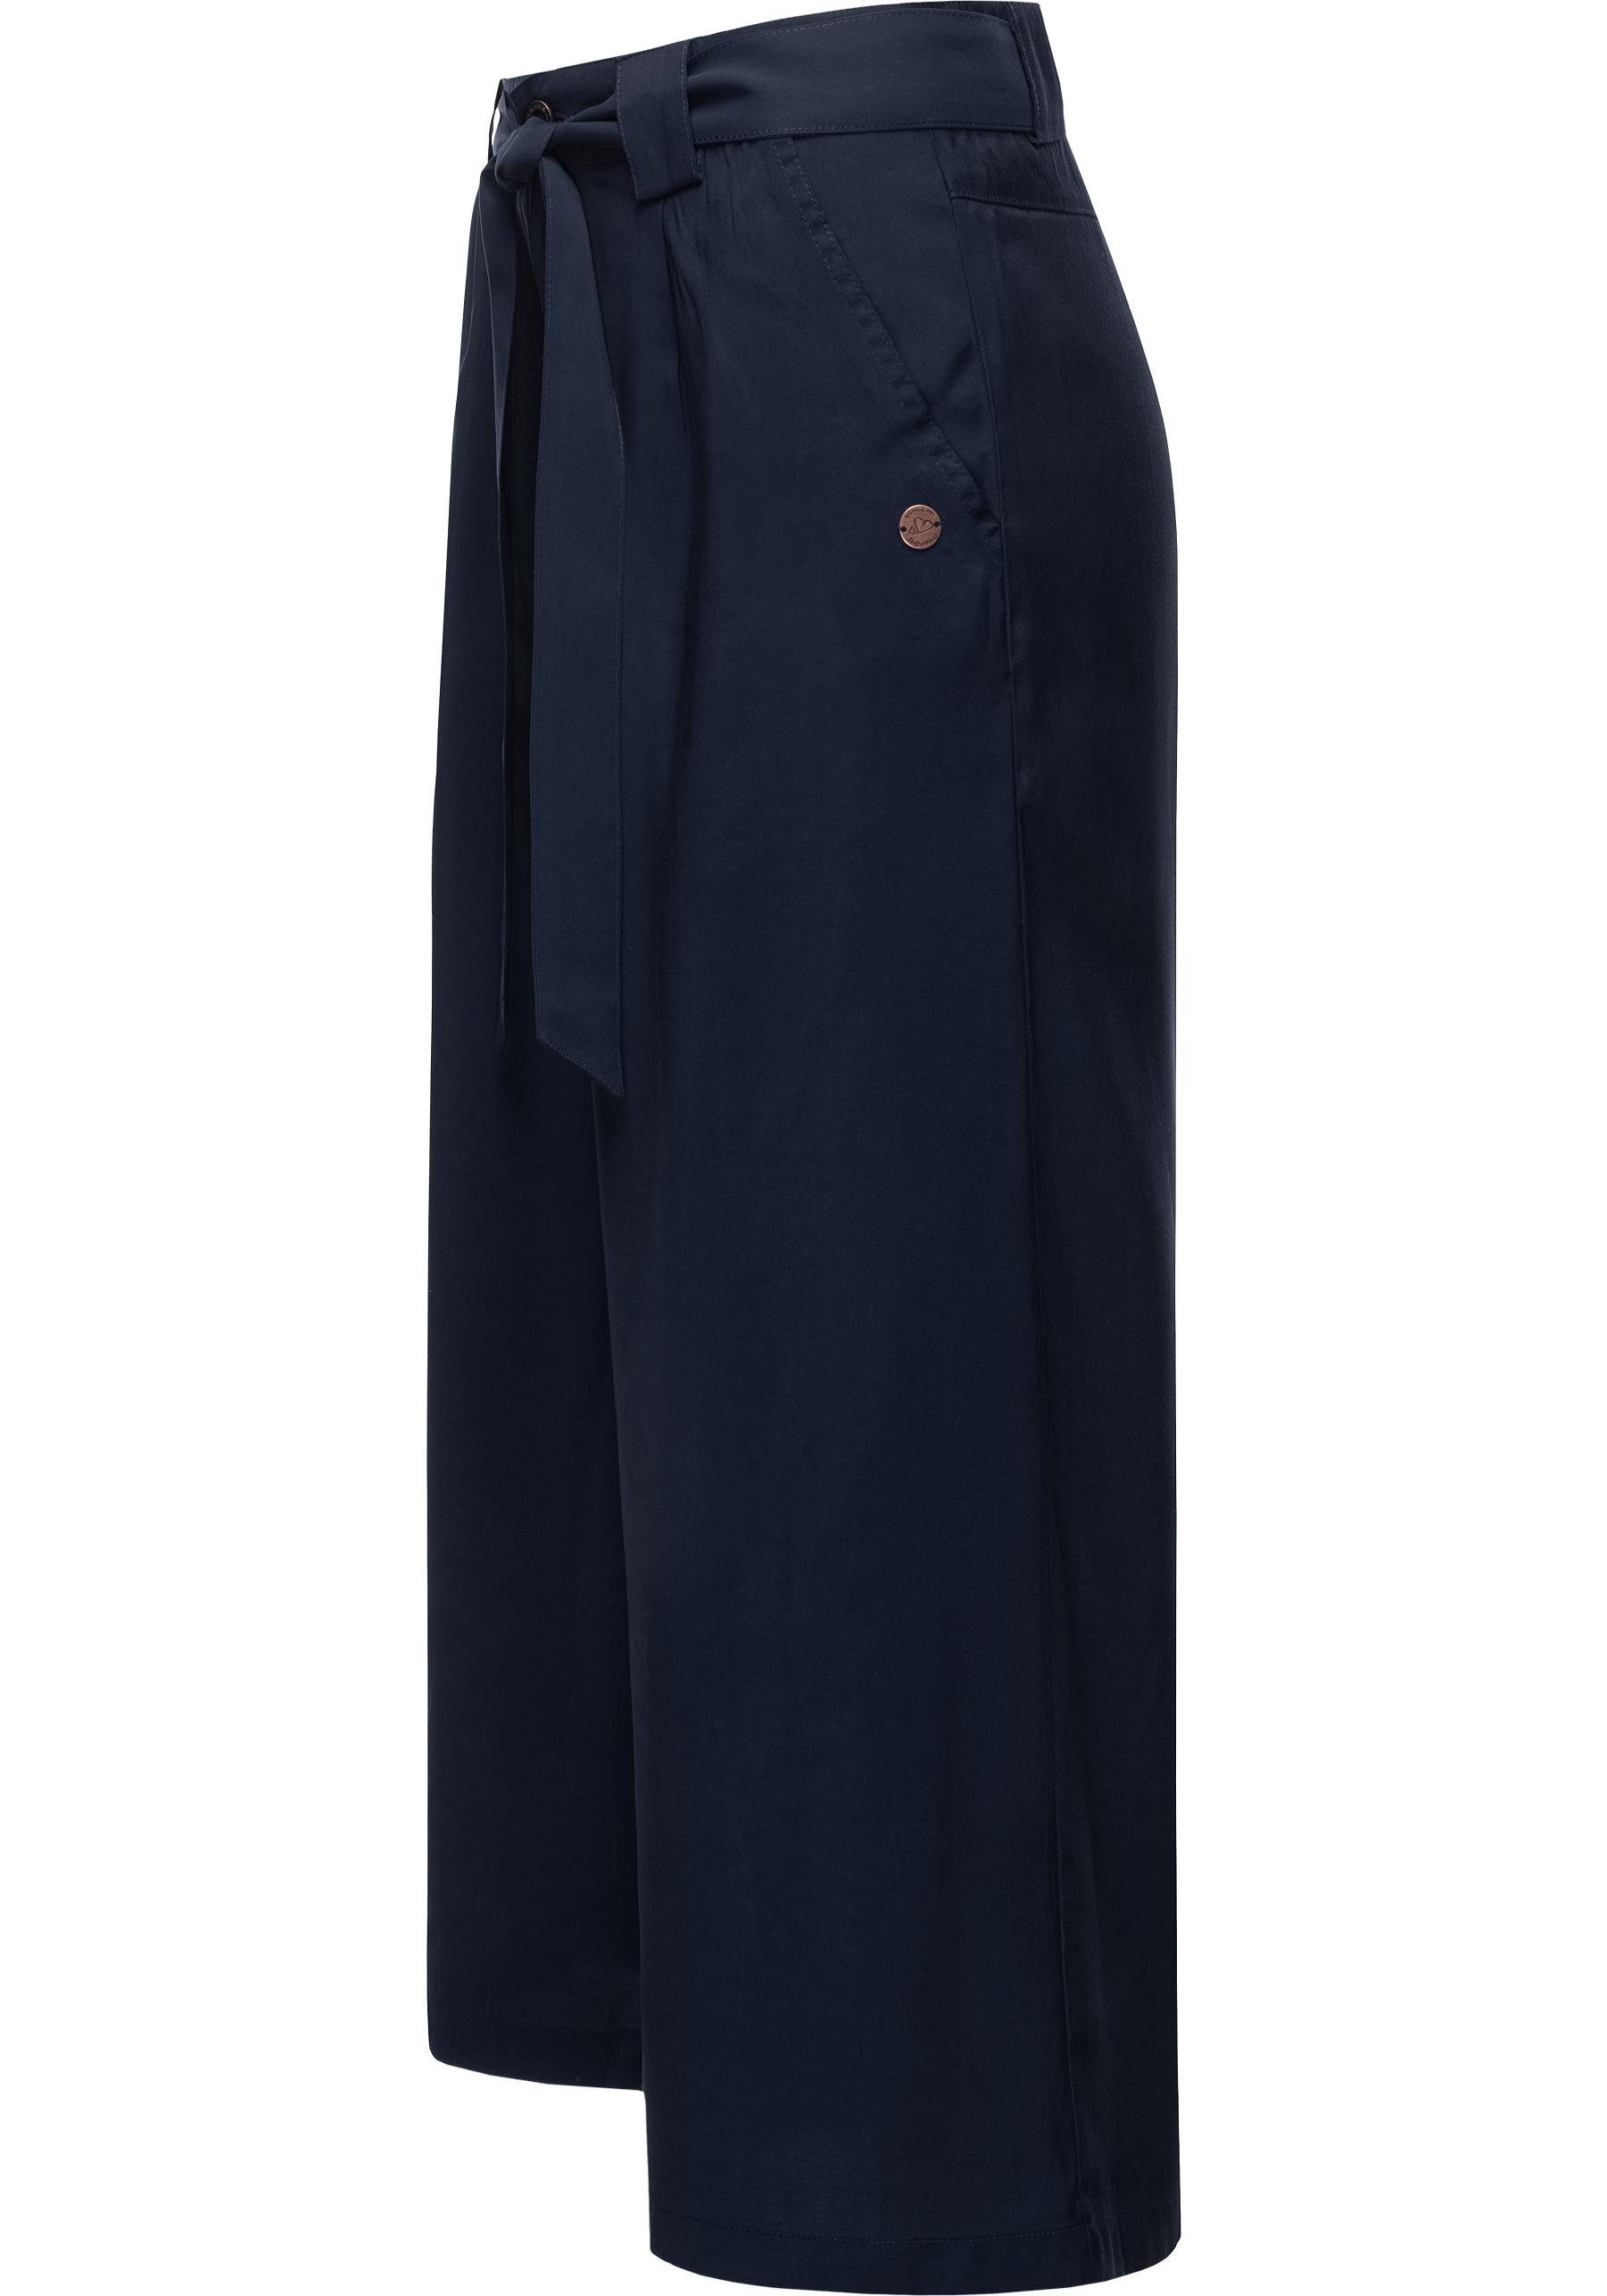 Yarai Culotte navy Hose Stylische mit Stoffhose Ragwear Gürtel